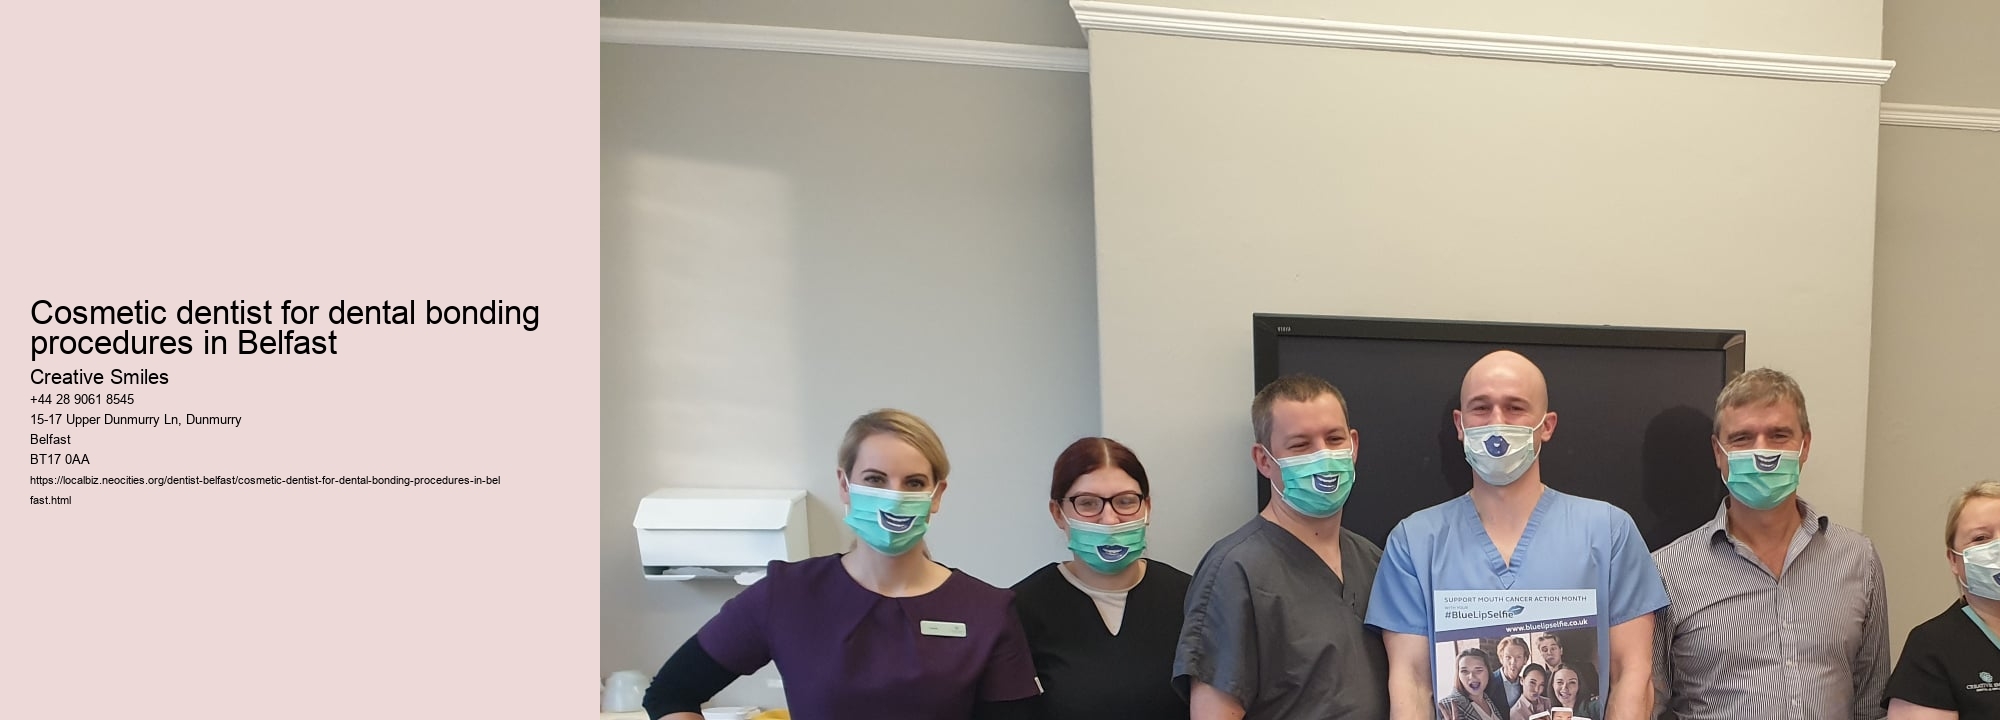 Cosmetic dentist for dental bonding procedures in Belfast